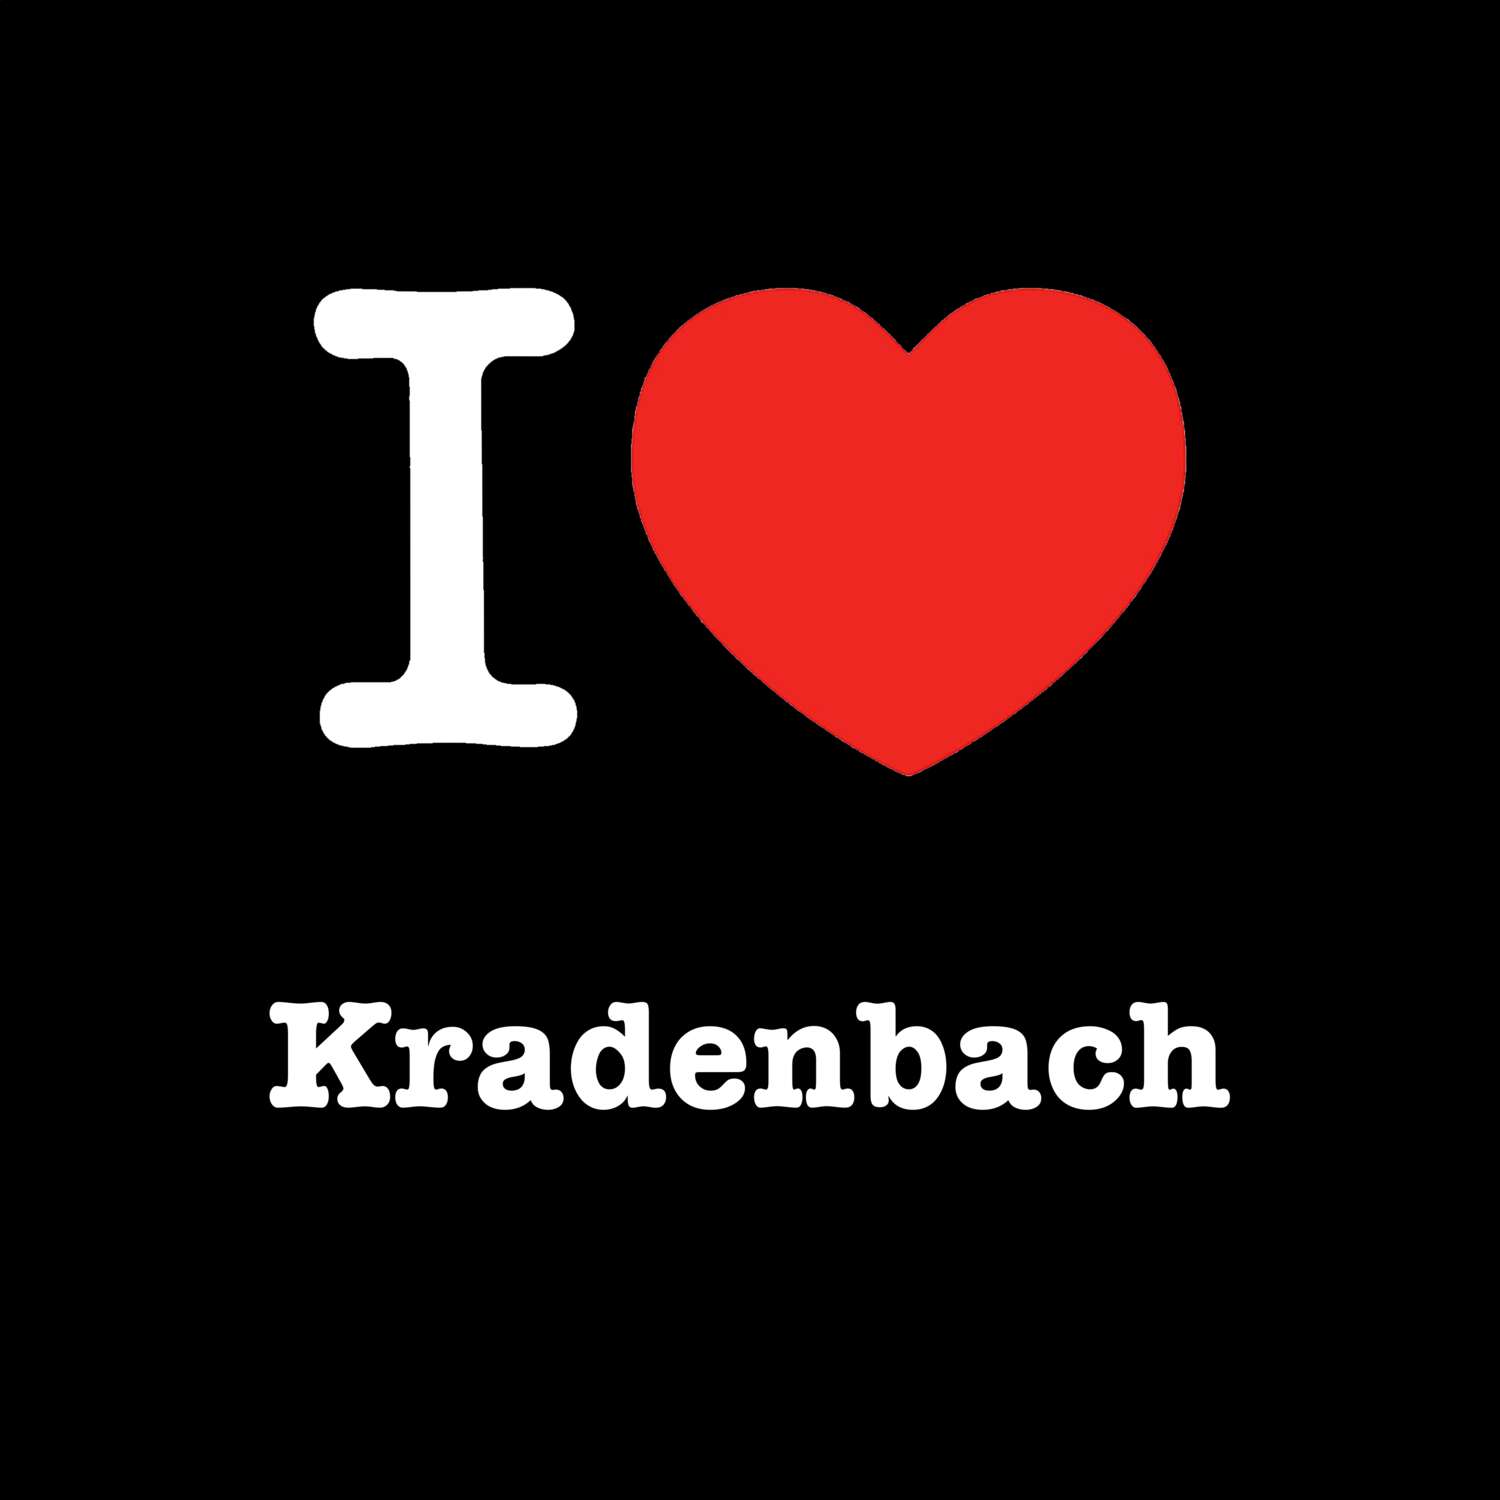 Kradenbach T-Shirt »I love«